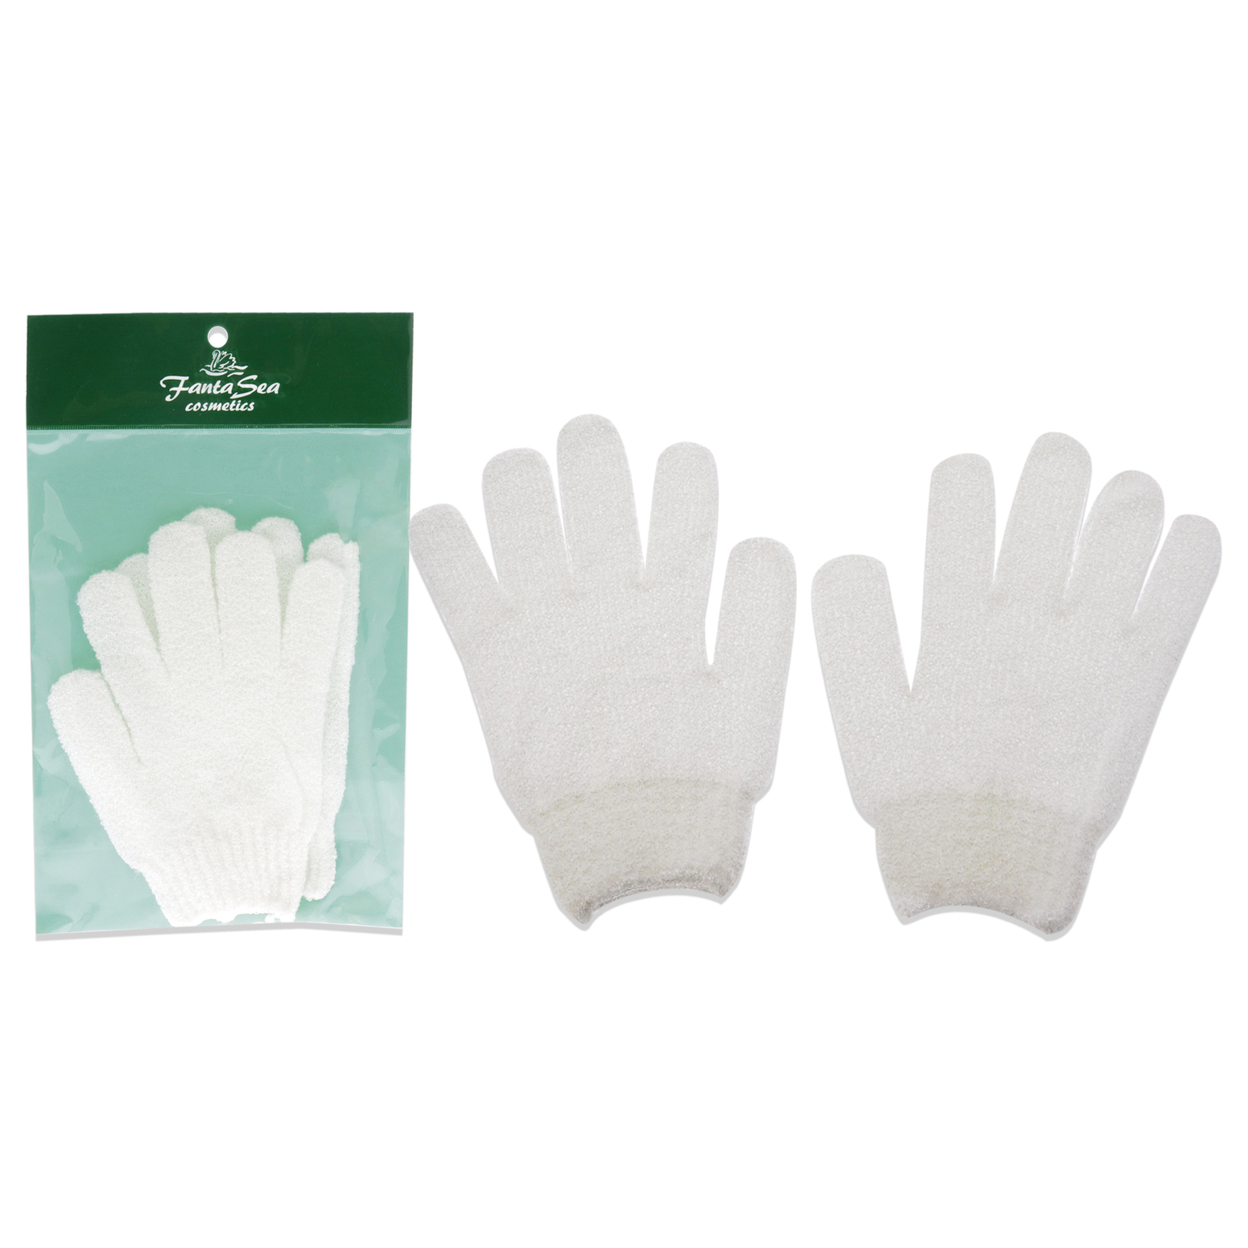 FantaSea Exfoliating Gloves - White 1 Pair